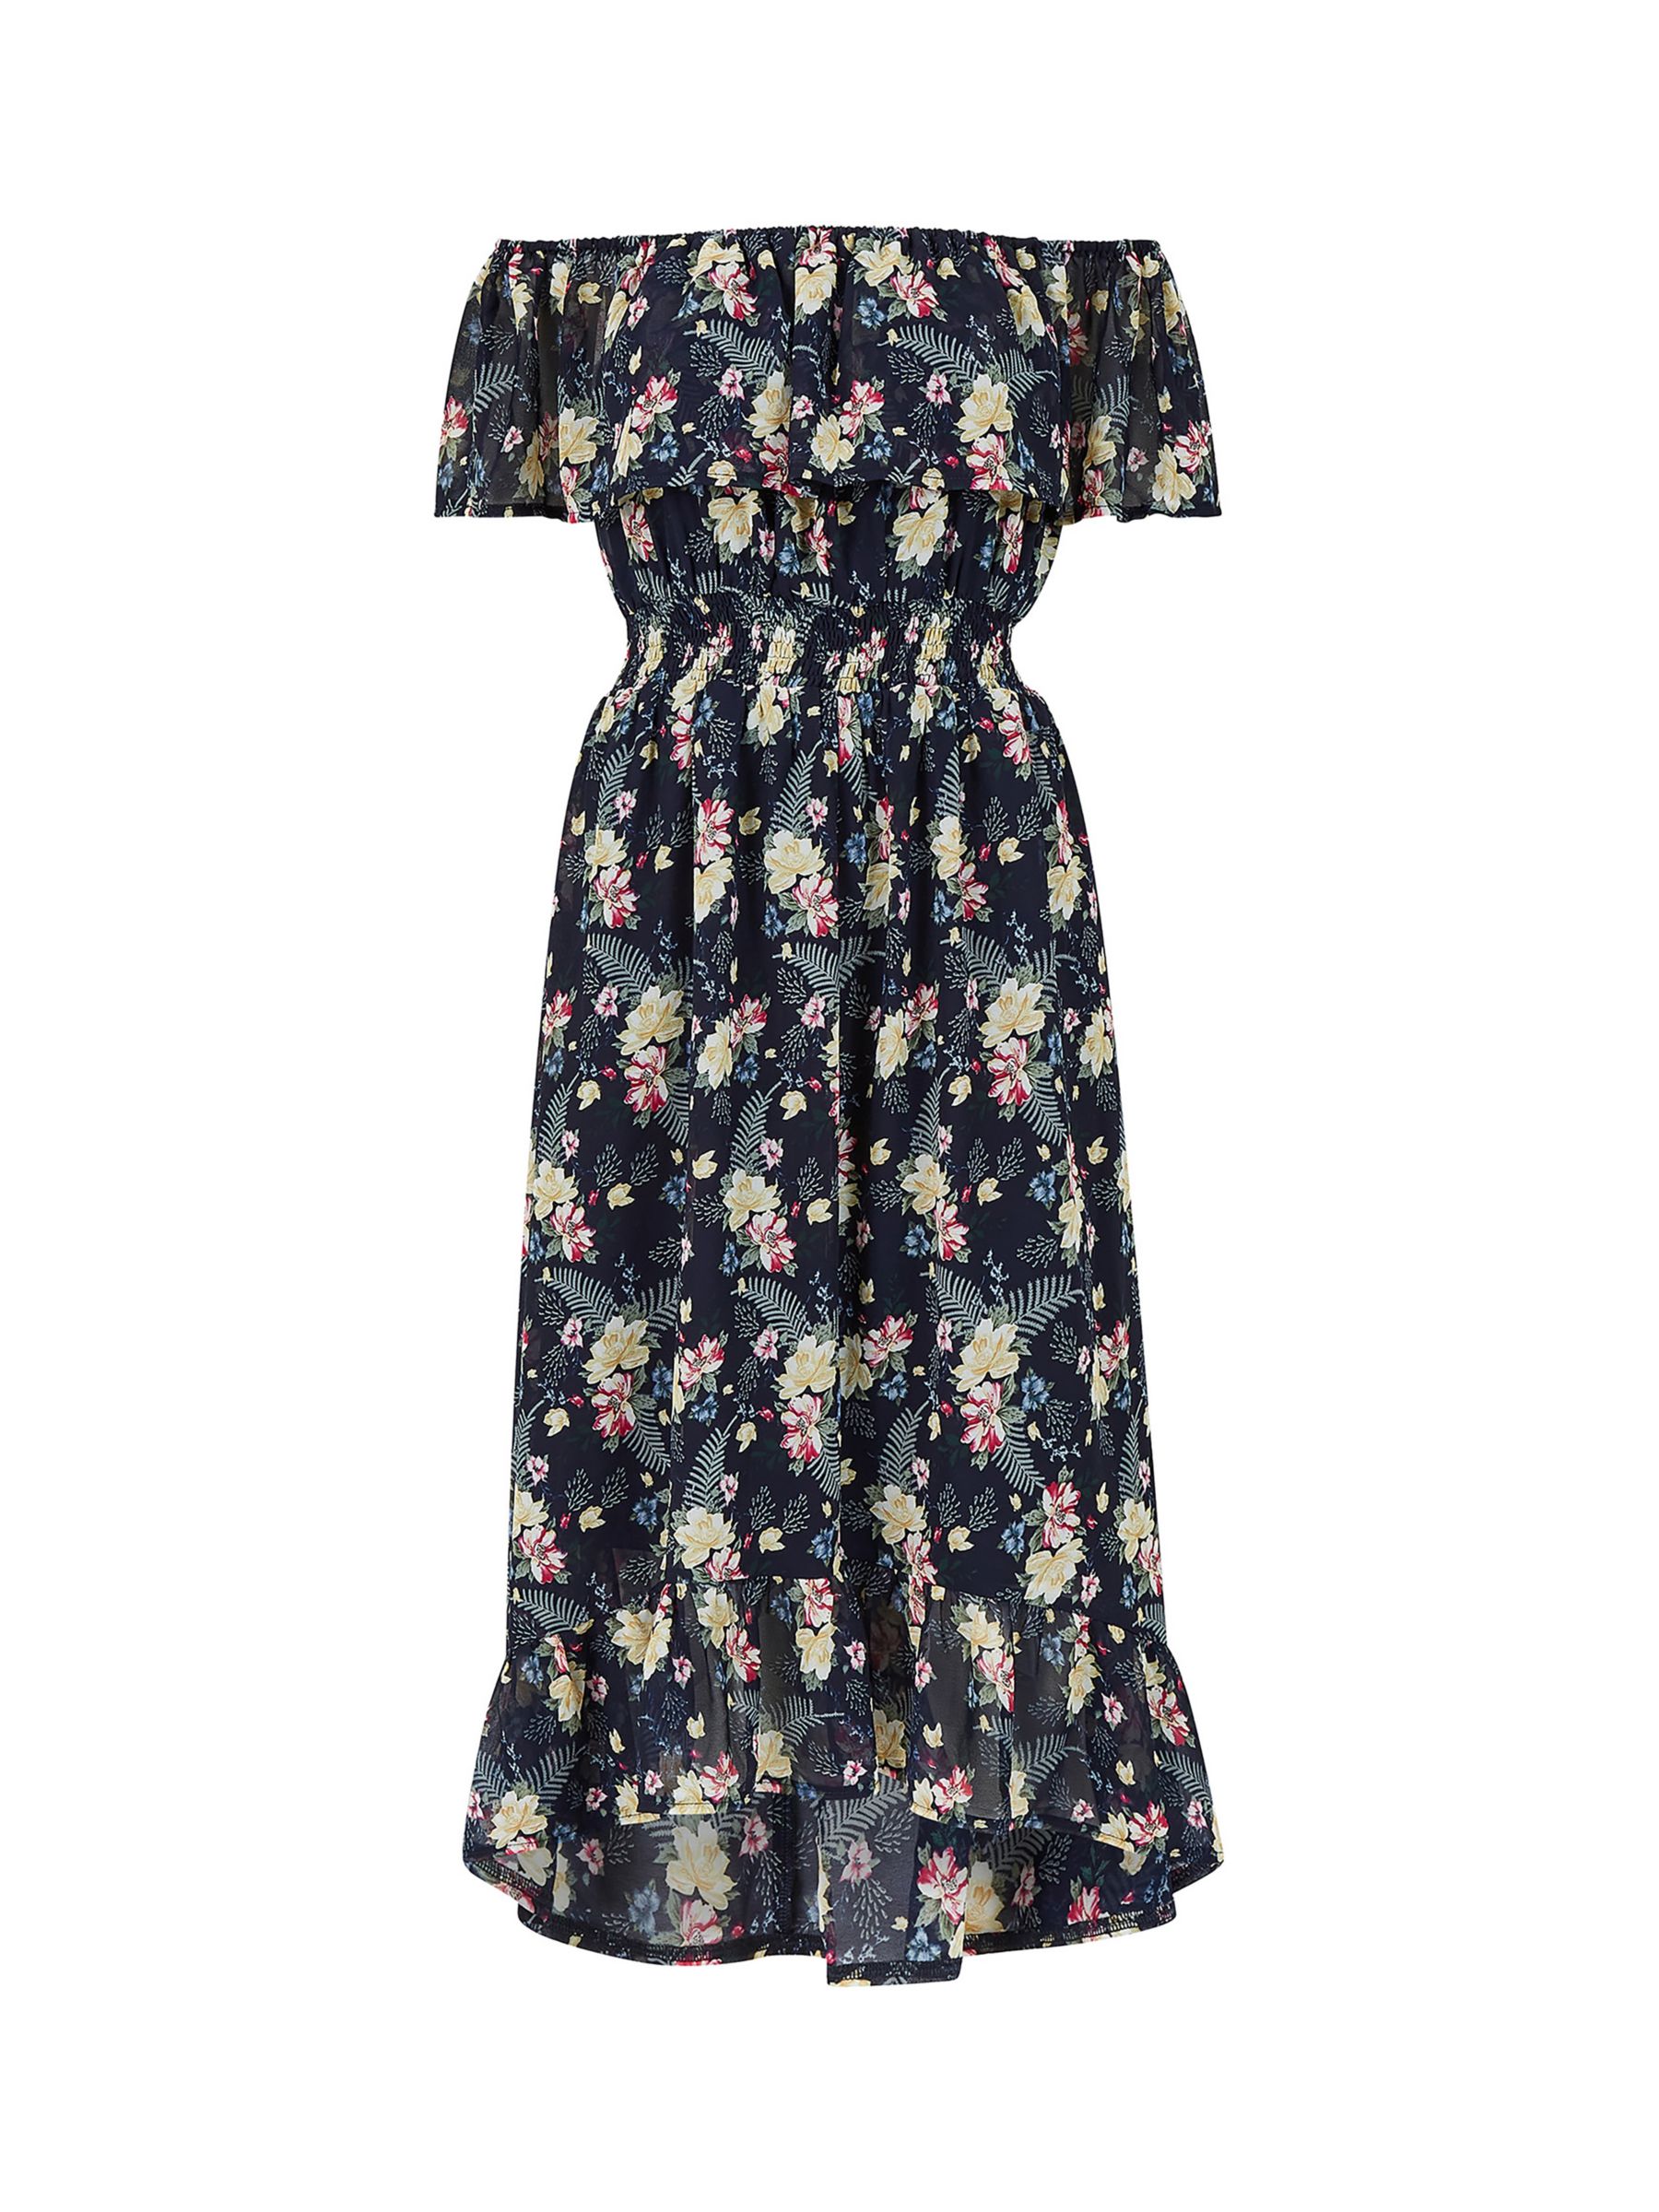 Mela London Tropical Print Dip Hem Bardot Midi Dress, Navy/Multi, 8